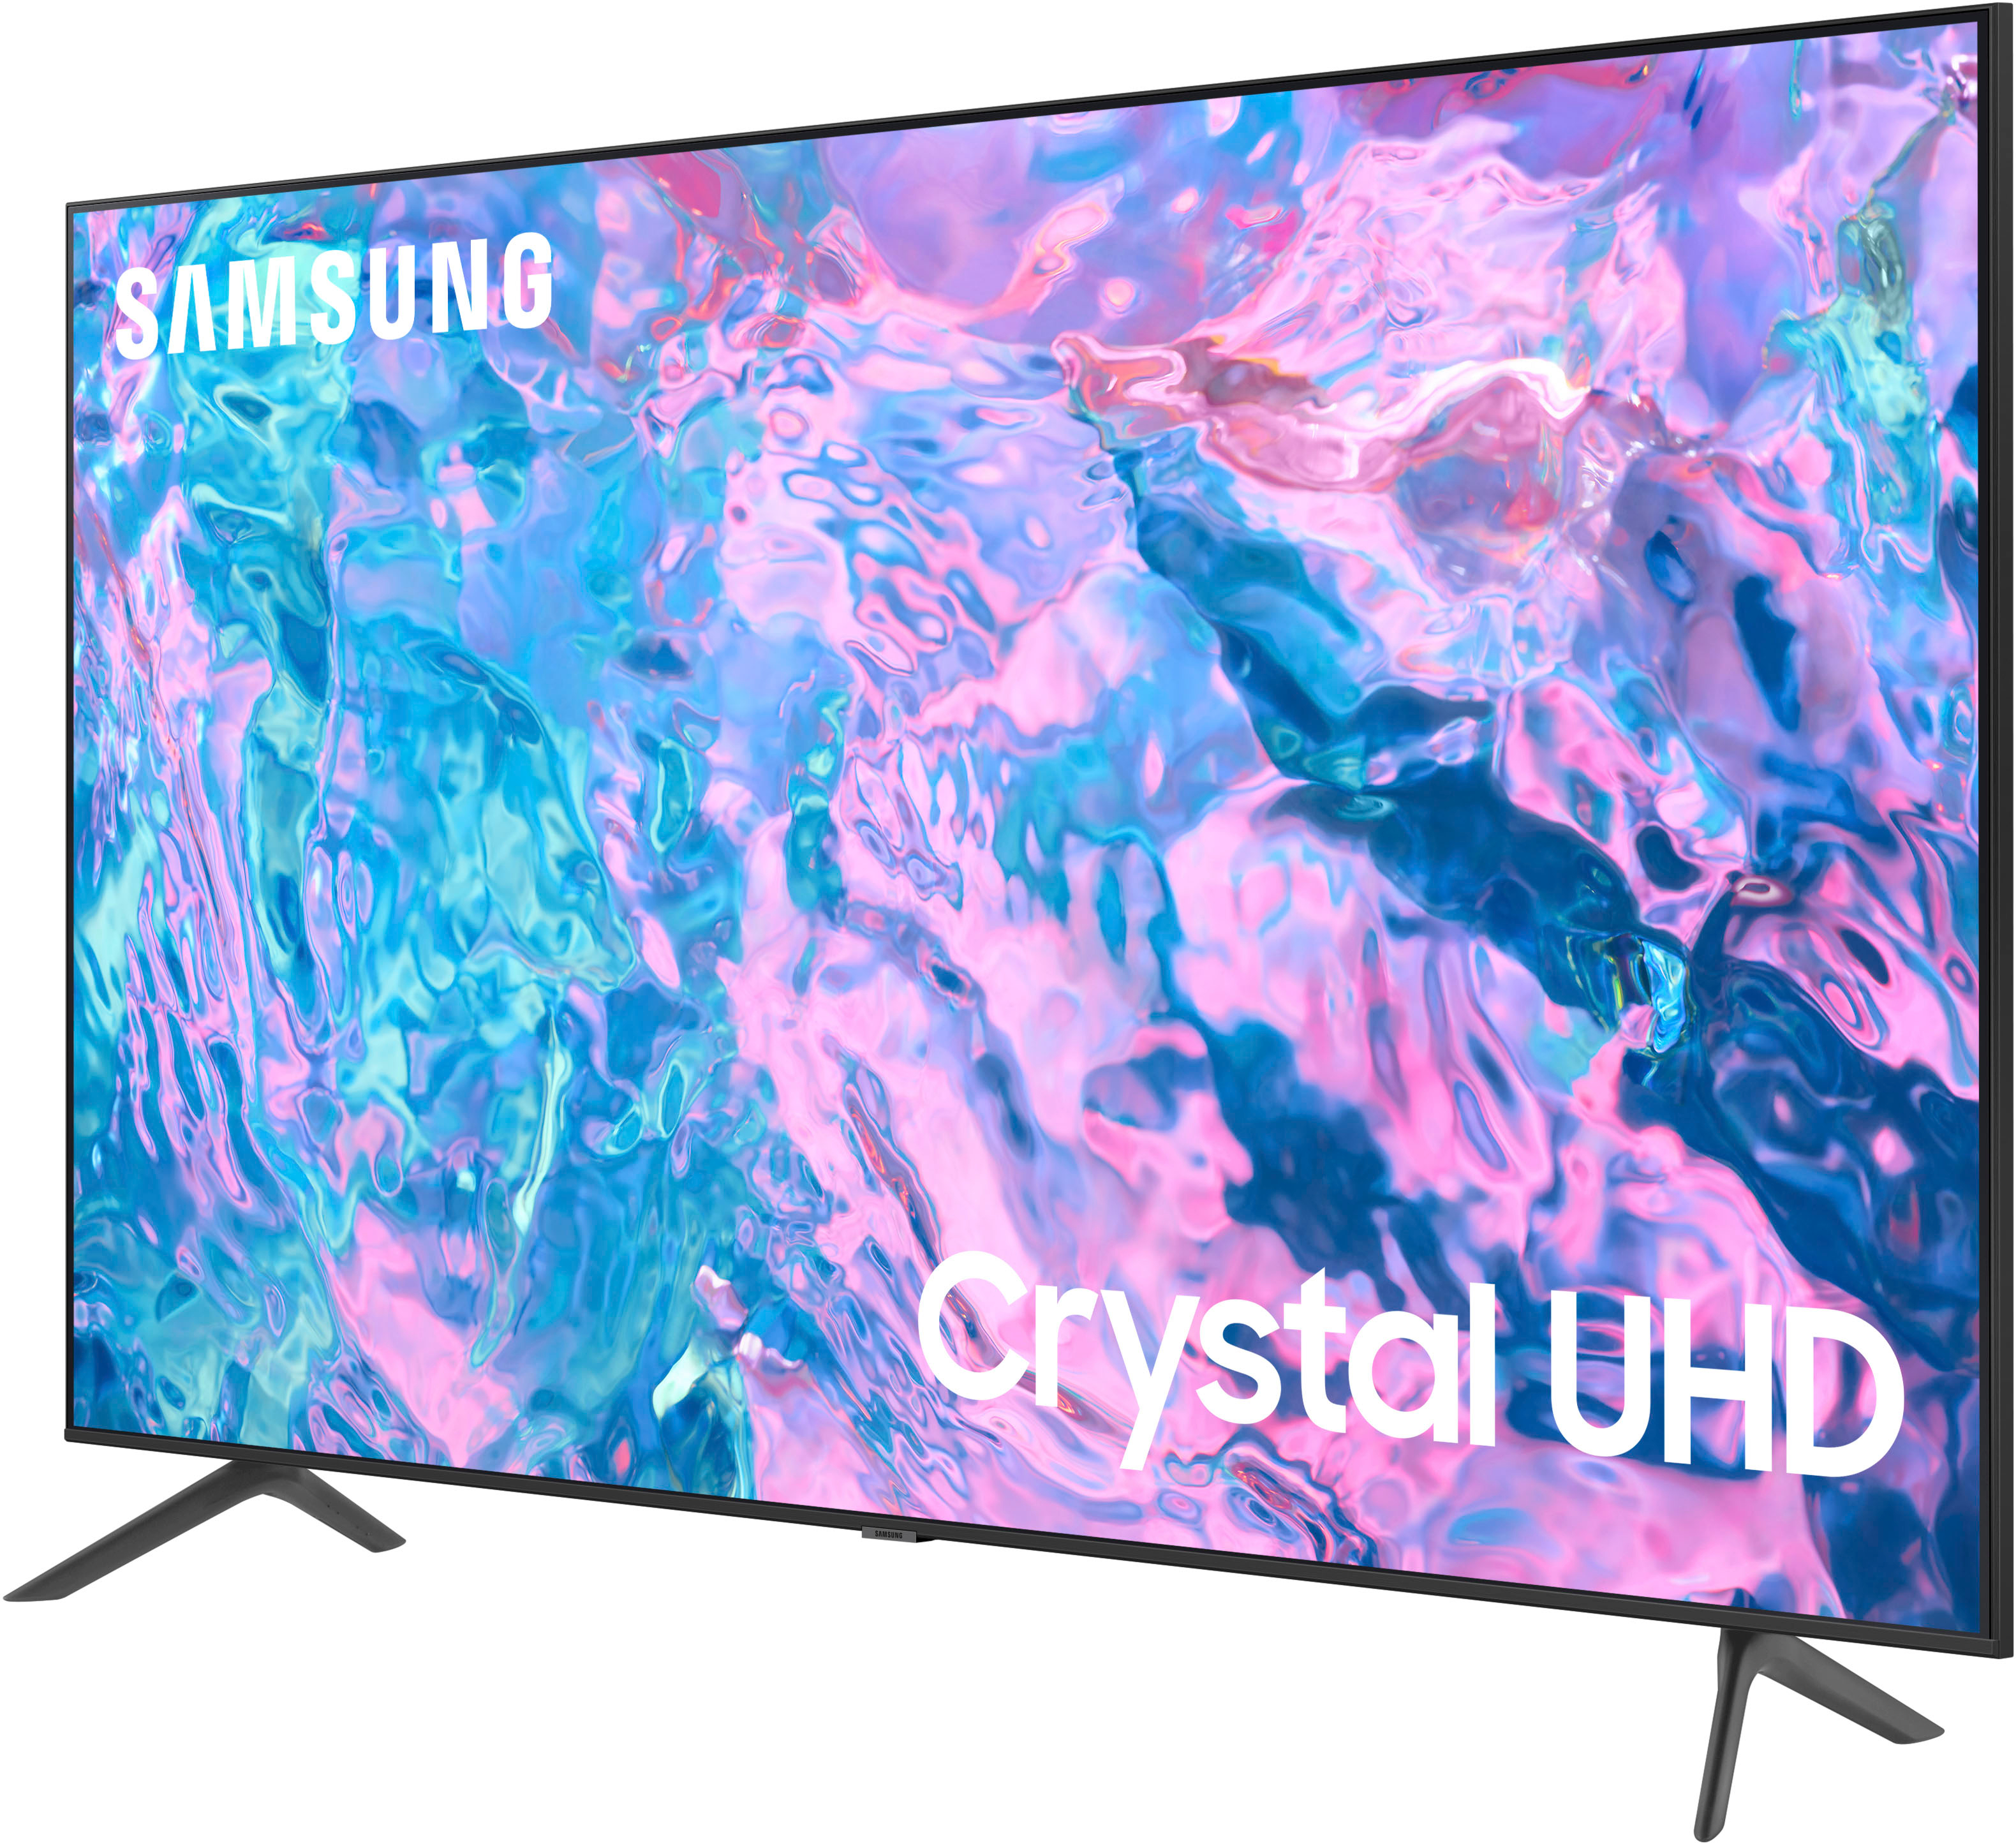 Samsung 75” Class CU7000 Crystal UHD UHD Smart Tizen TV UN75CU7000FXZA - Buy